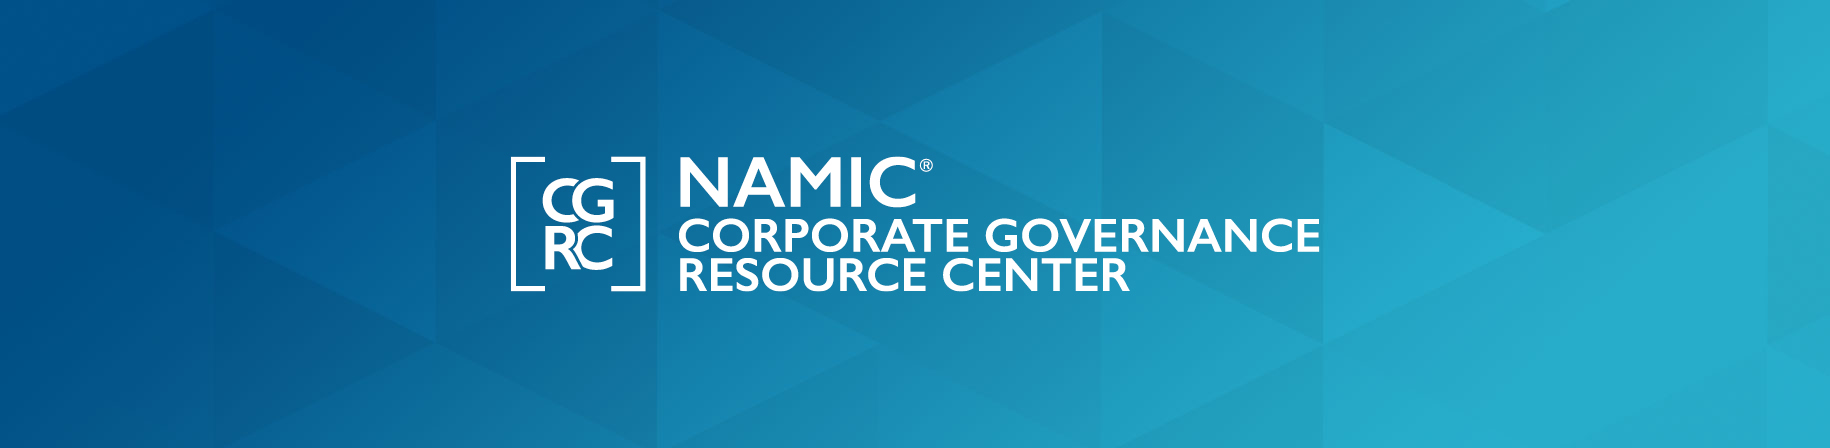 Corporate Governance Resource Center